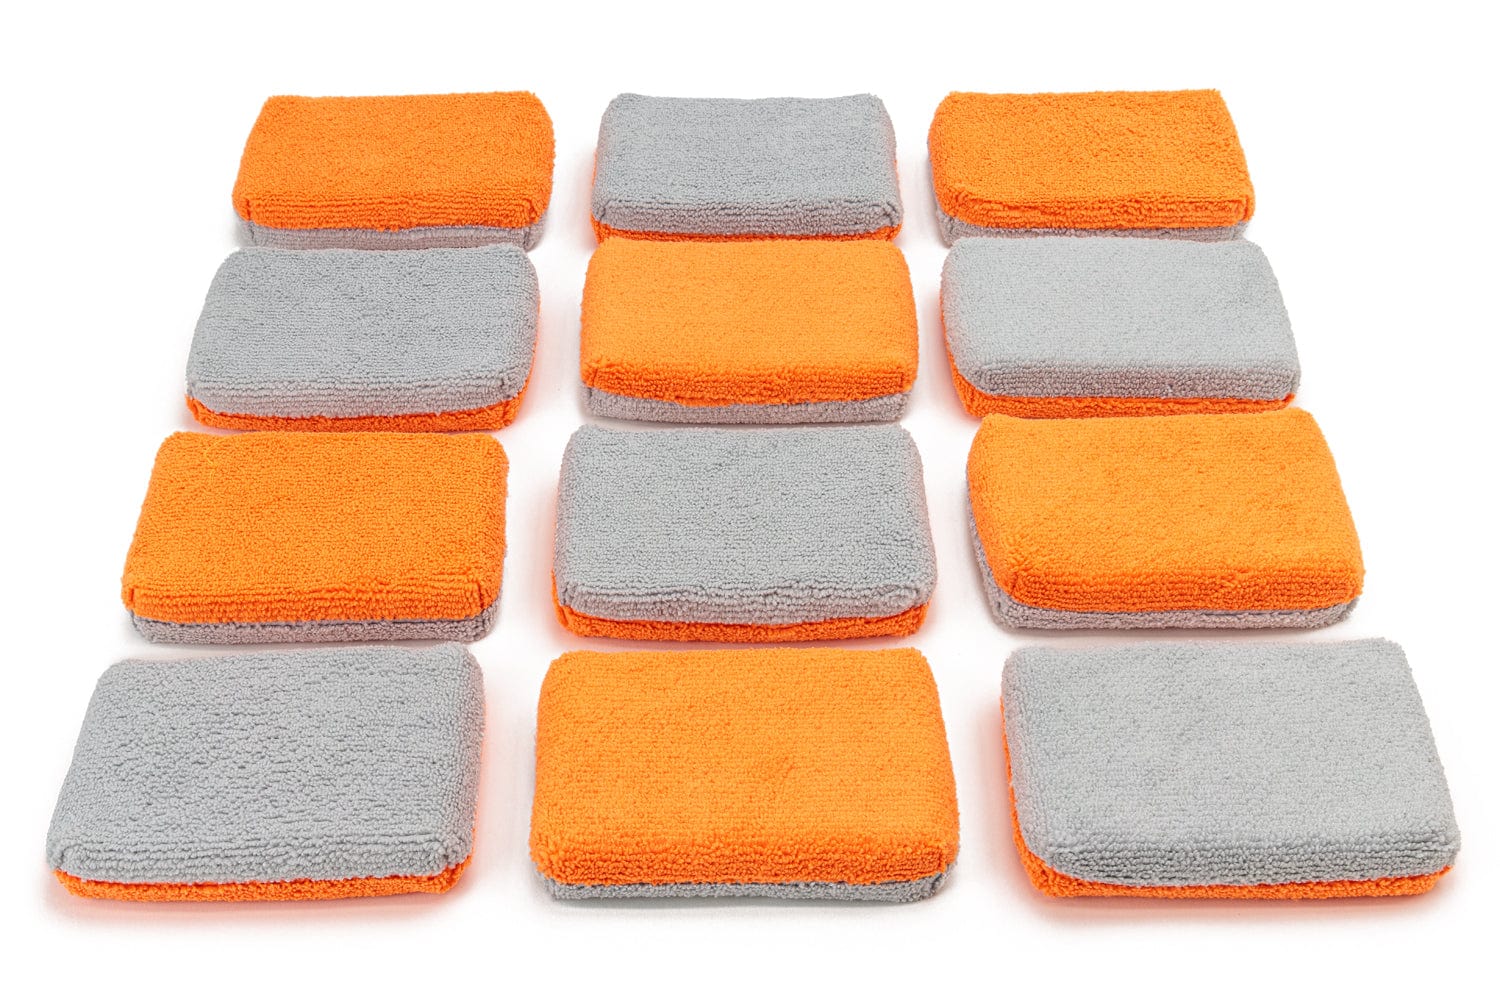 Autofiber Sponge Orange/Gray Thin [Saver Applicator Terry] Microfiber Coating Applicator Sponge with Plastic Barrier  - 12 pack